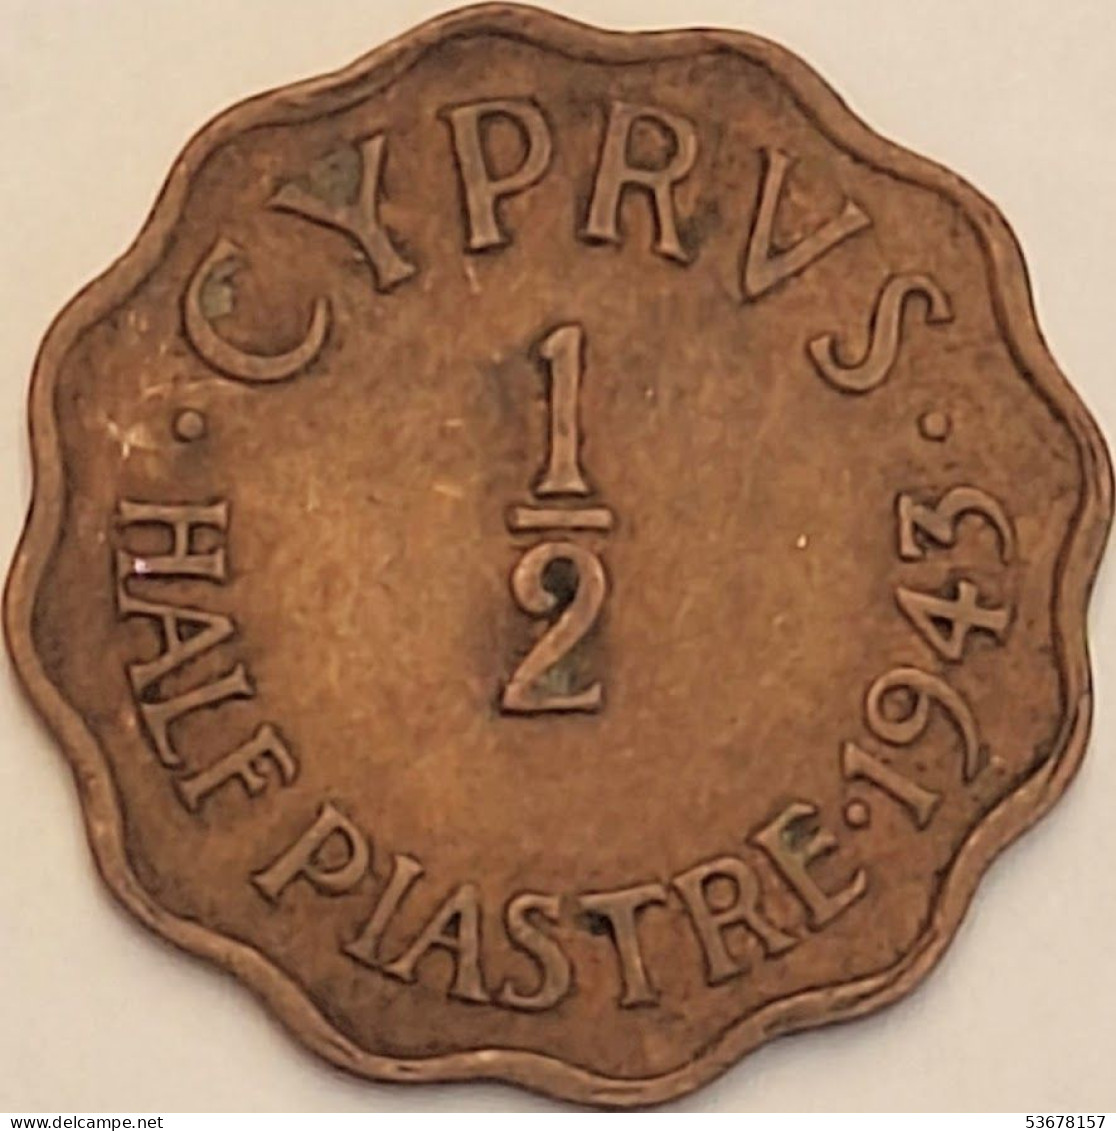 Cyprus - 1/2 Piastre 1943, KM# 22a (#3588) - Zypern